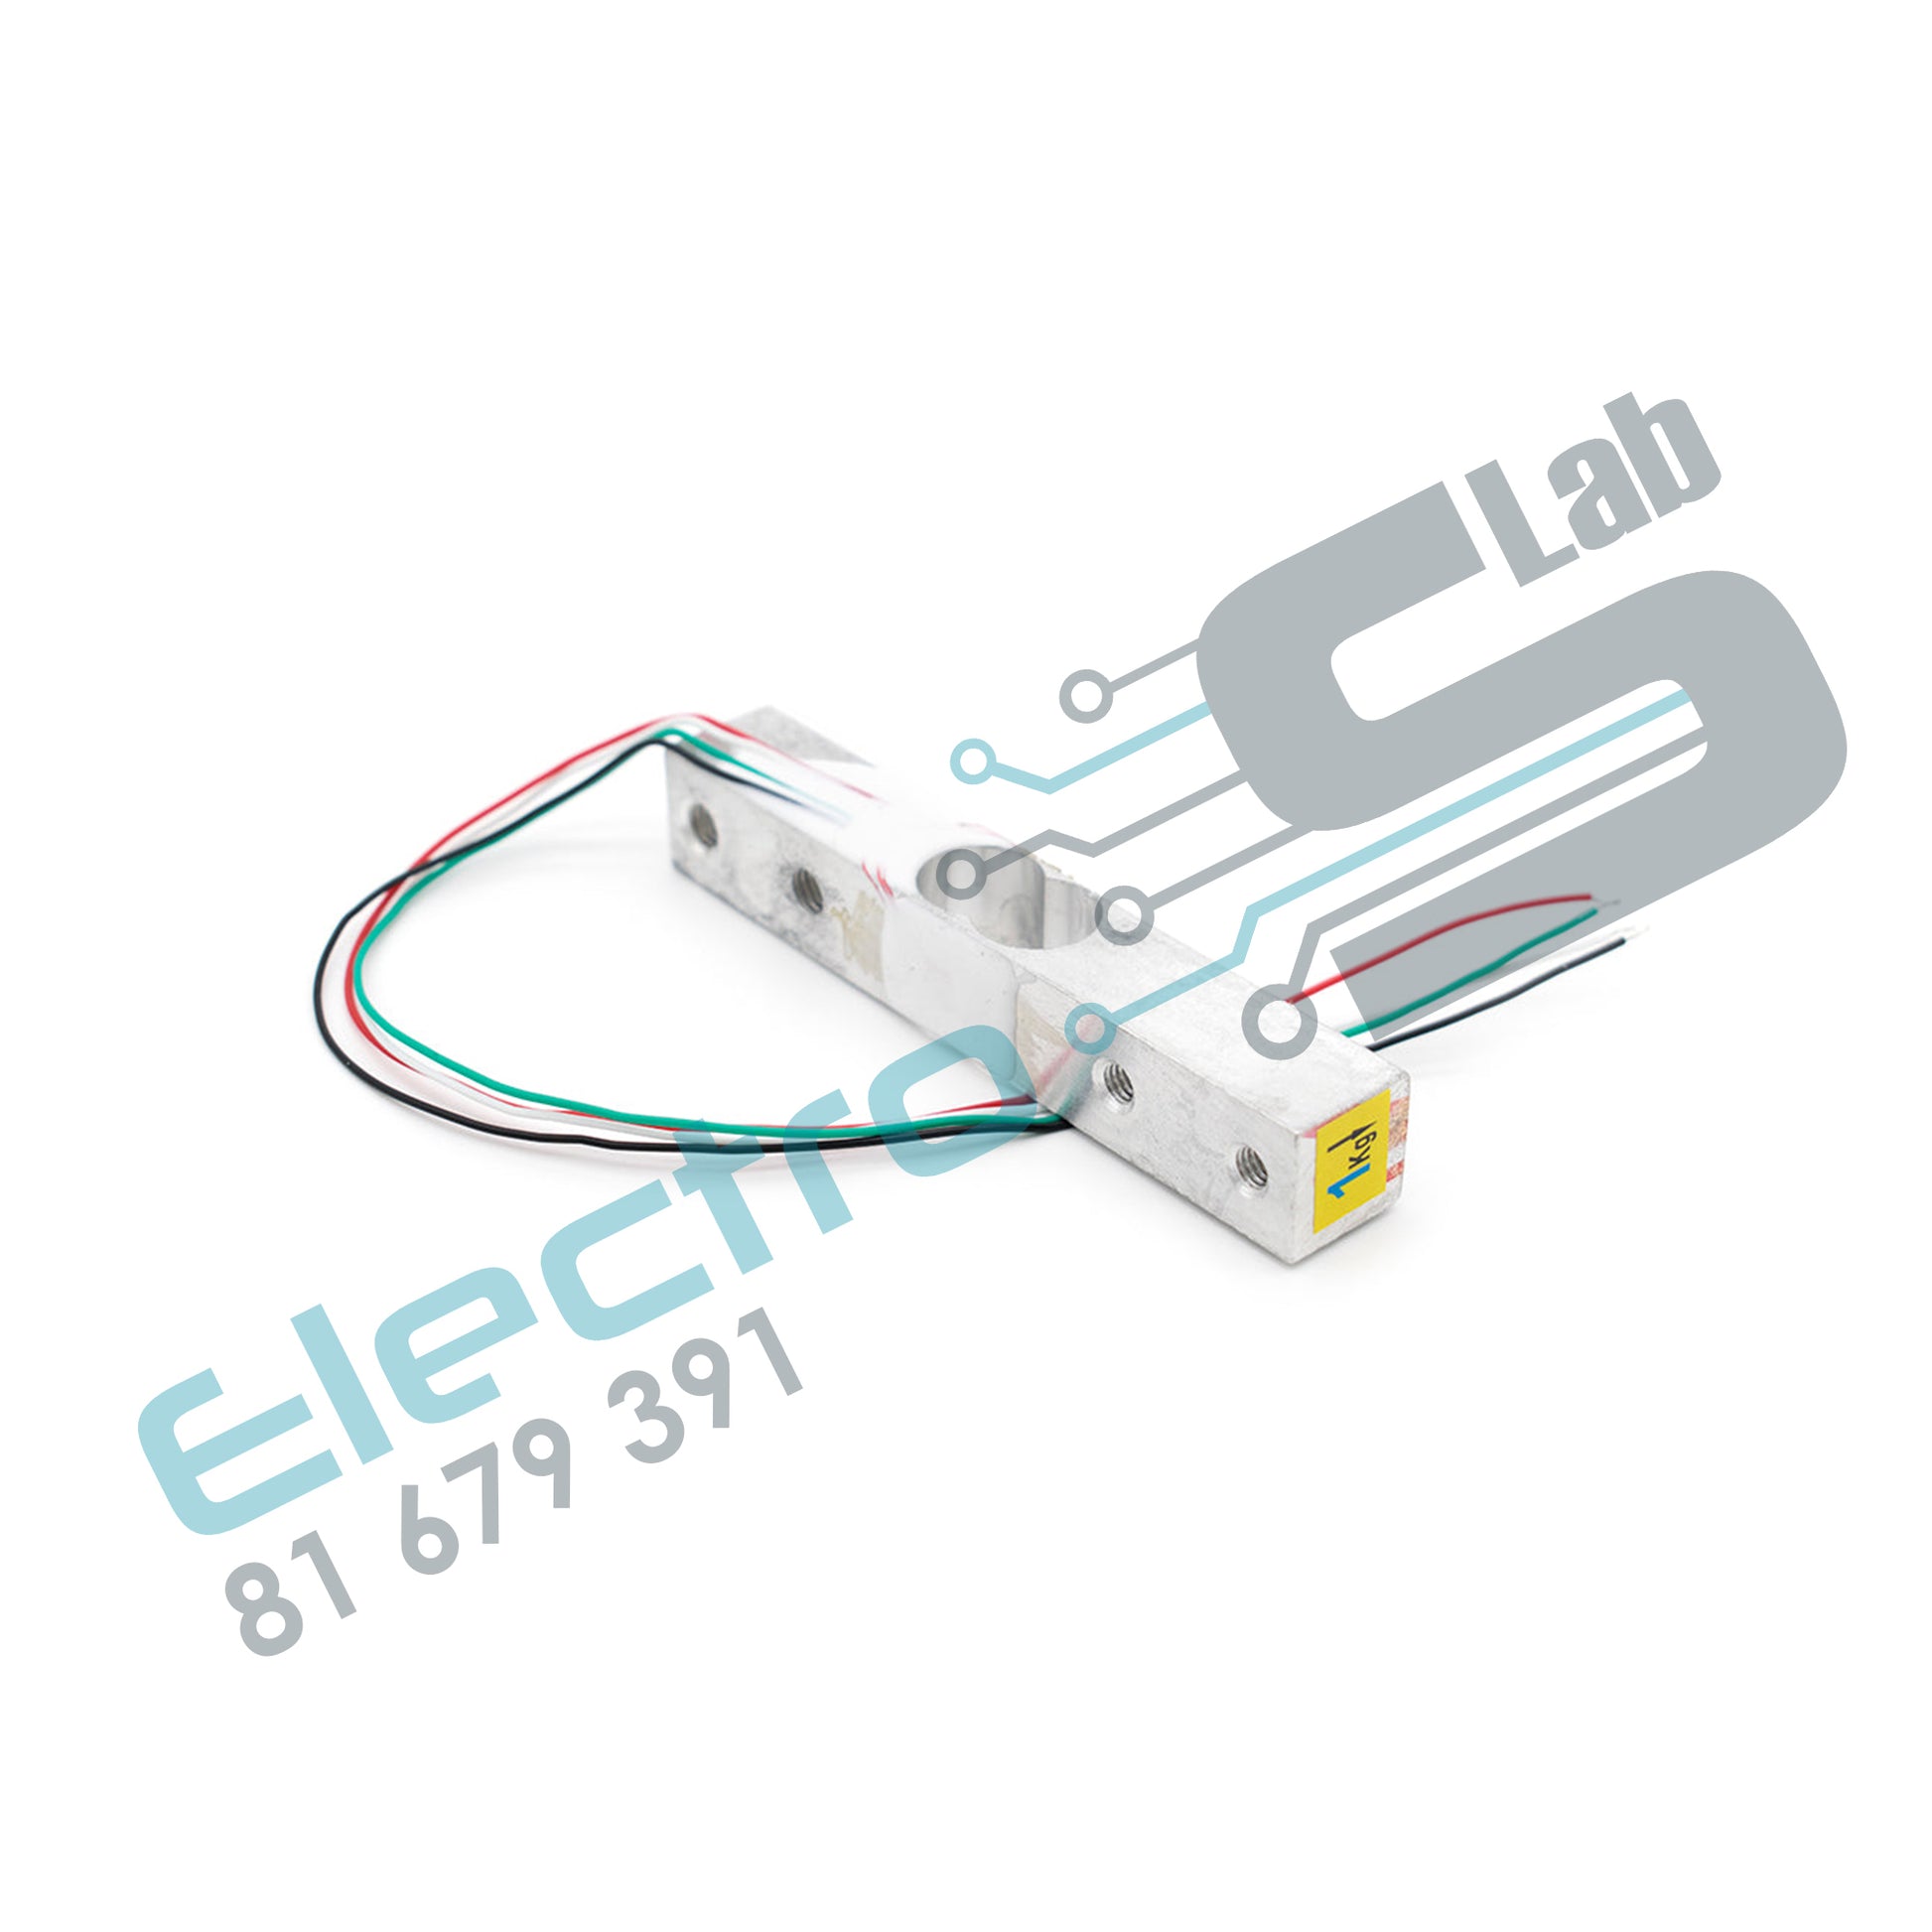 ESP32 – Electroslab